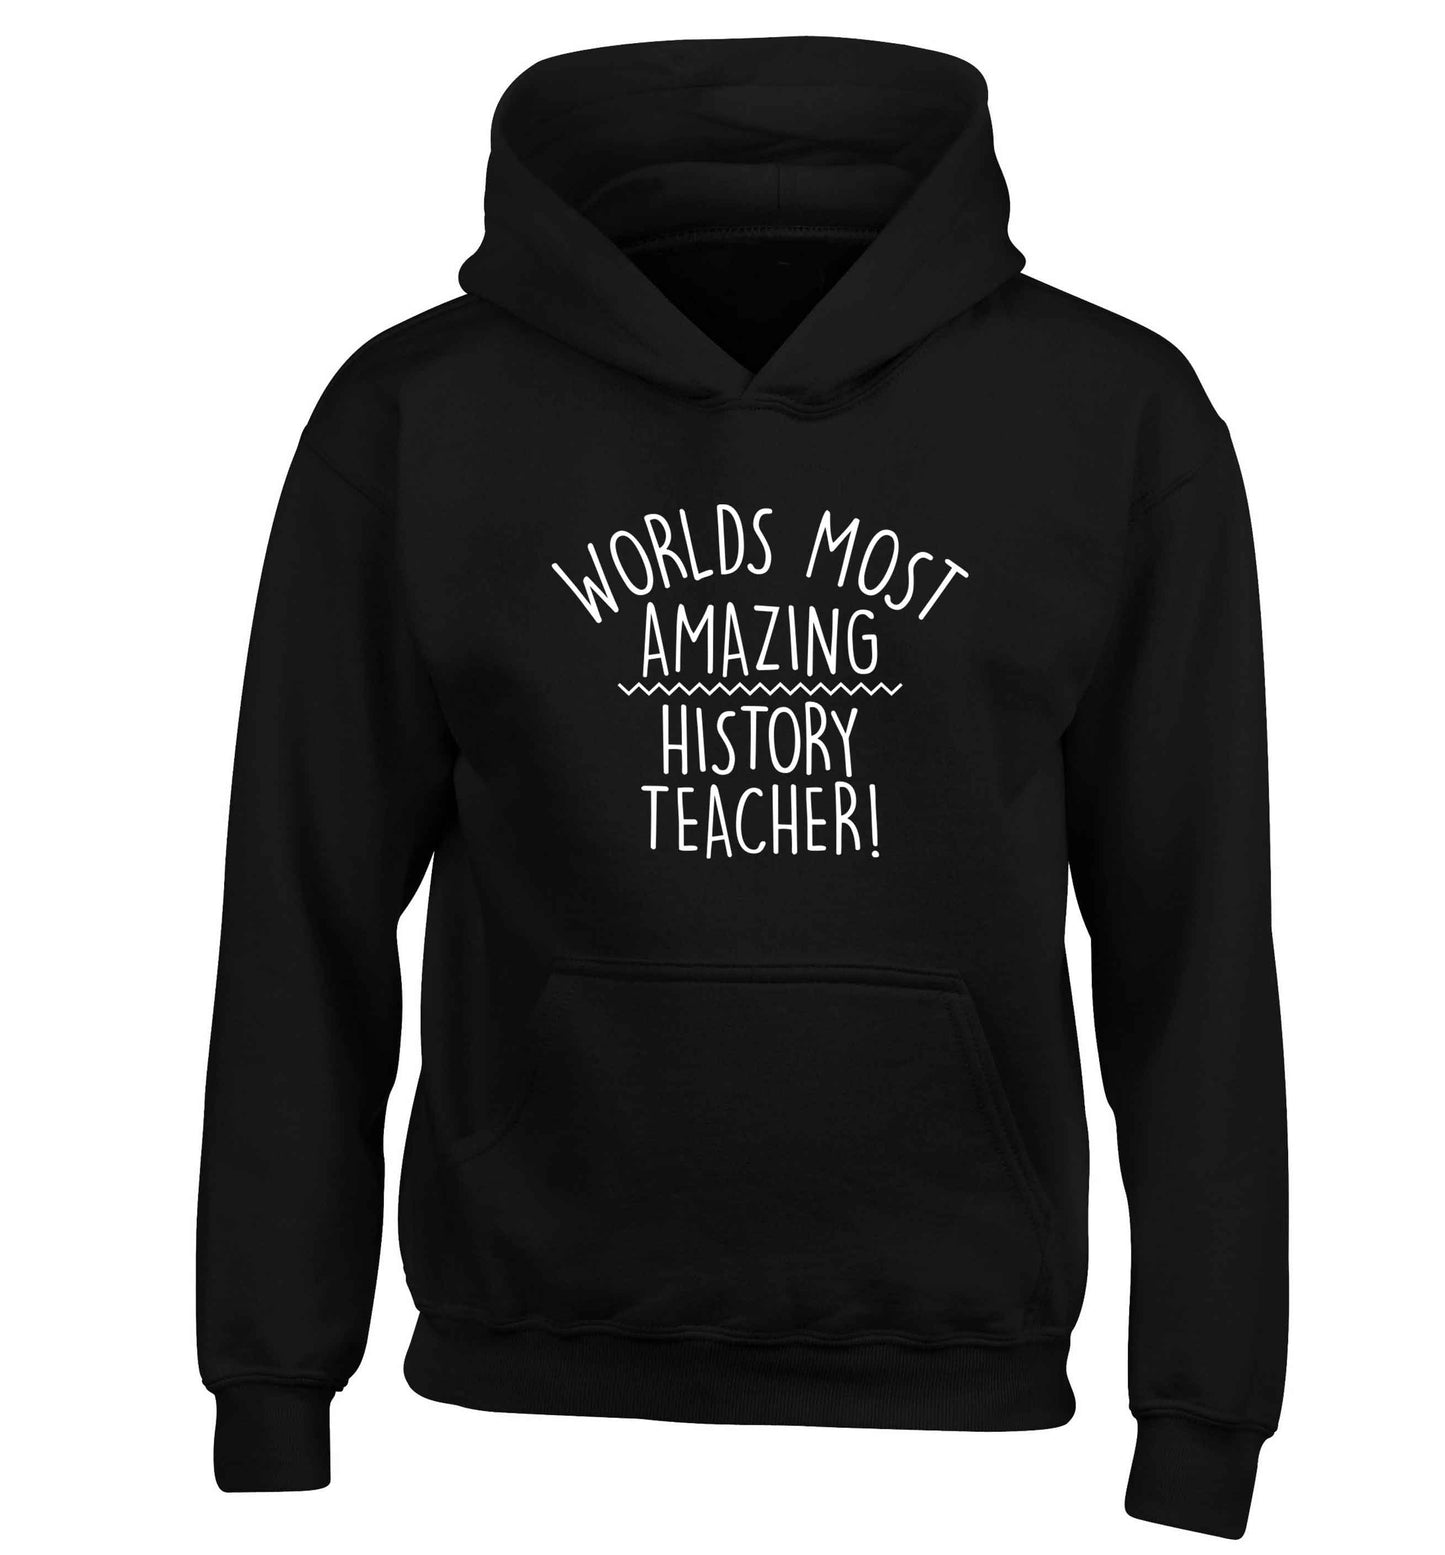 Worlds most amazing History teacher children's black hoodie 12-13 Years